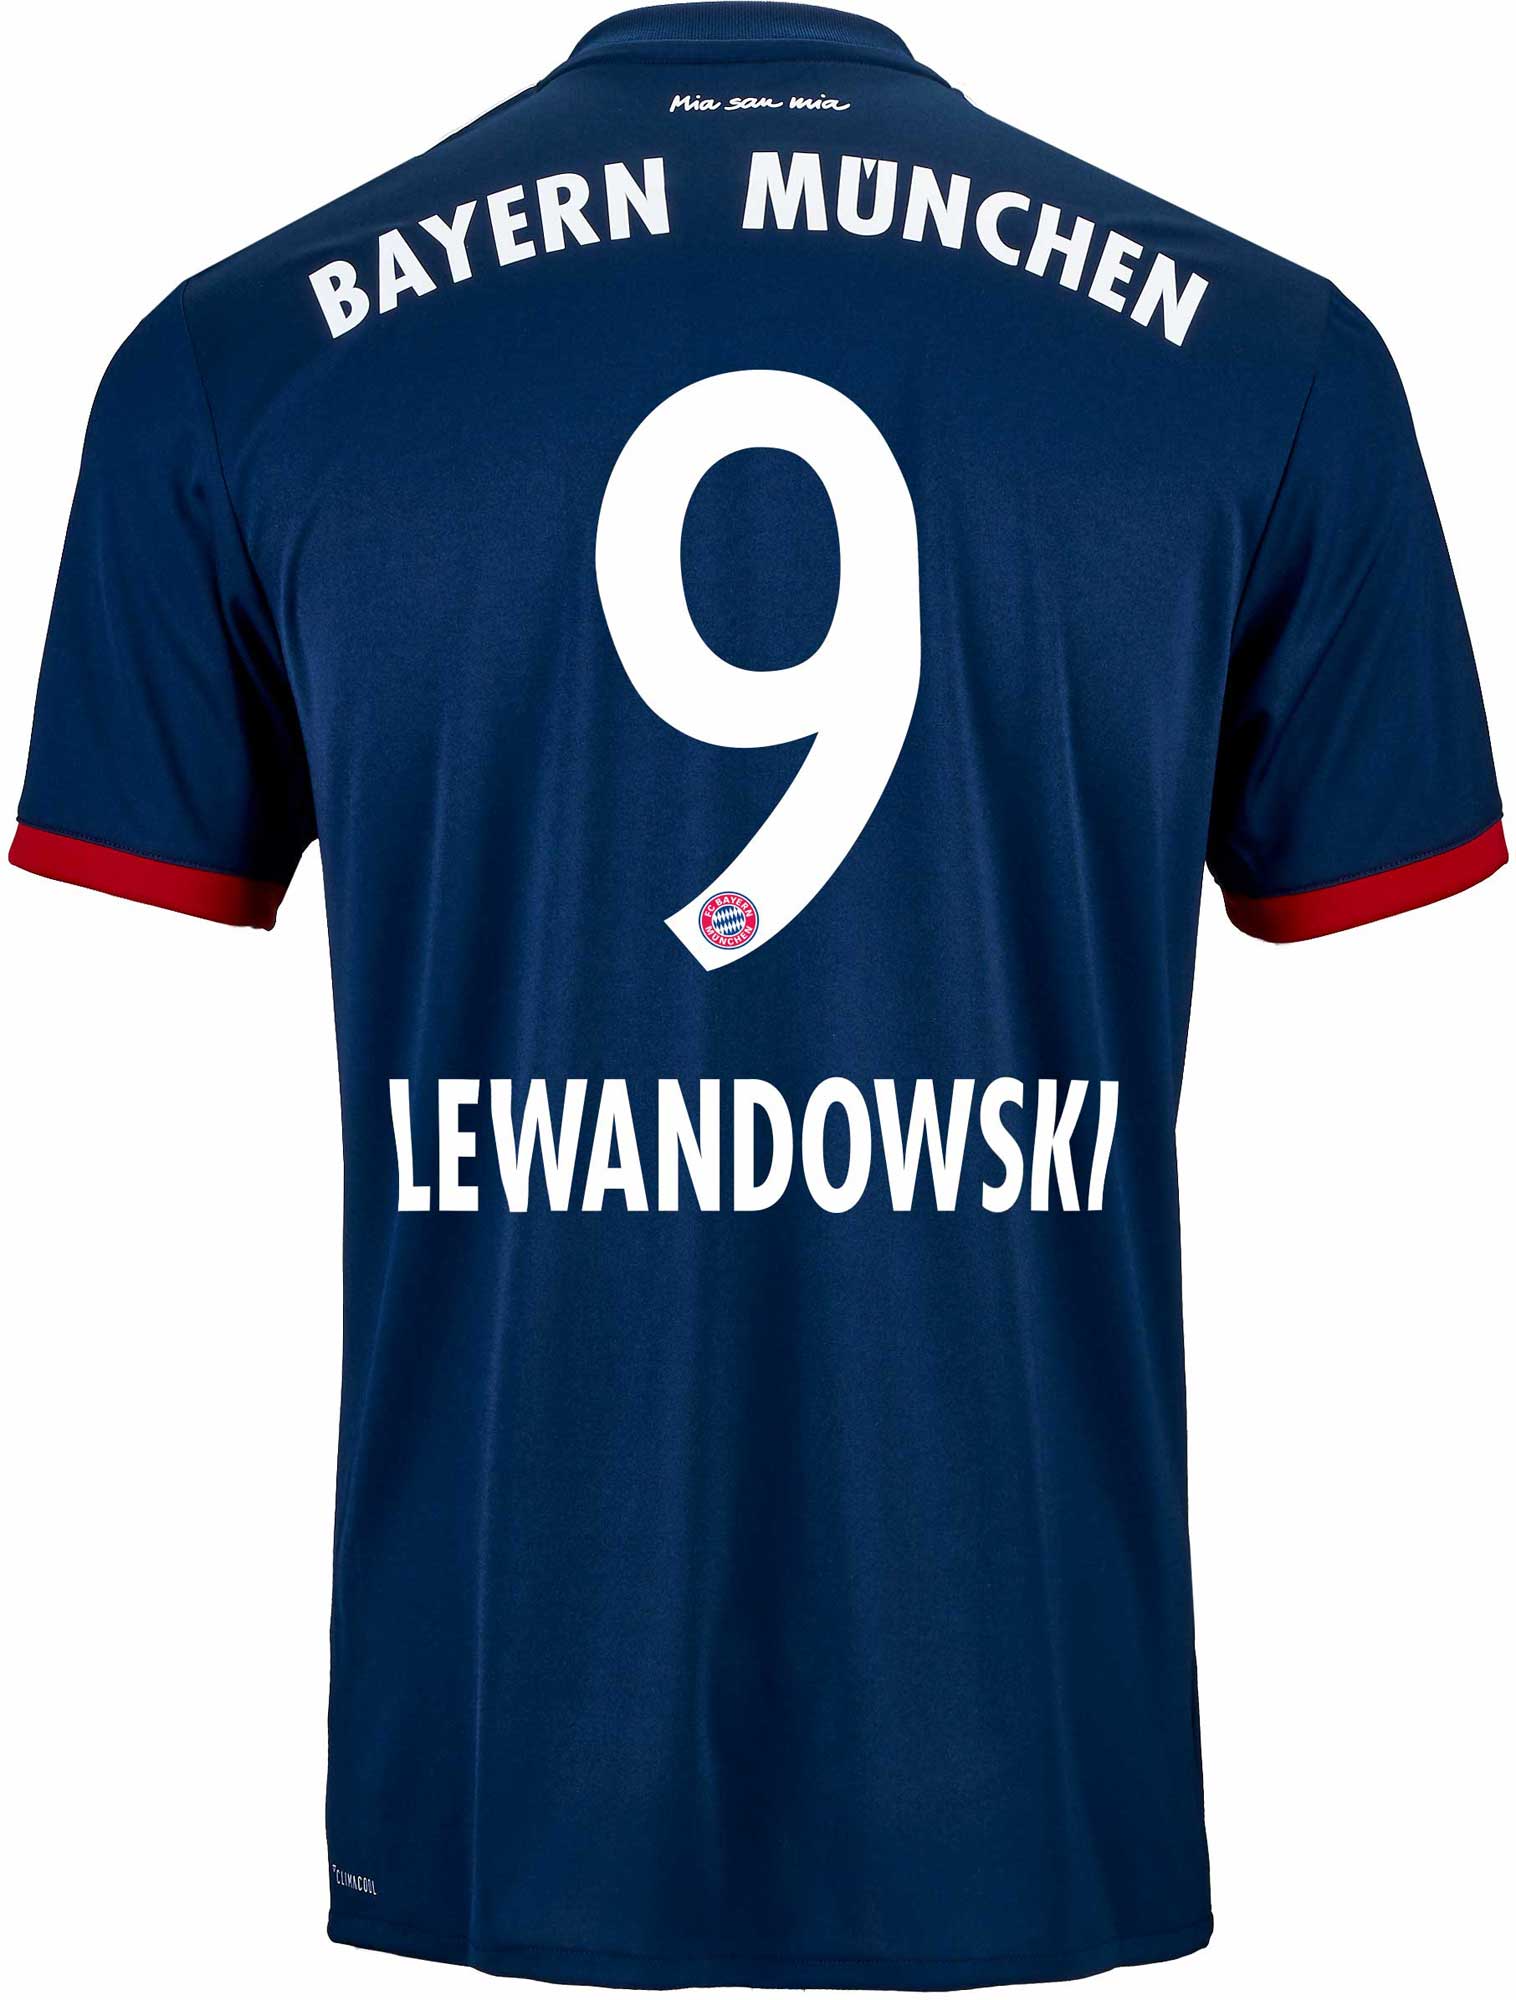 robert lewandowski jersey